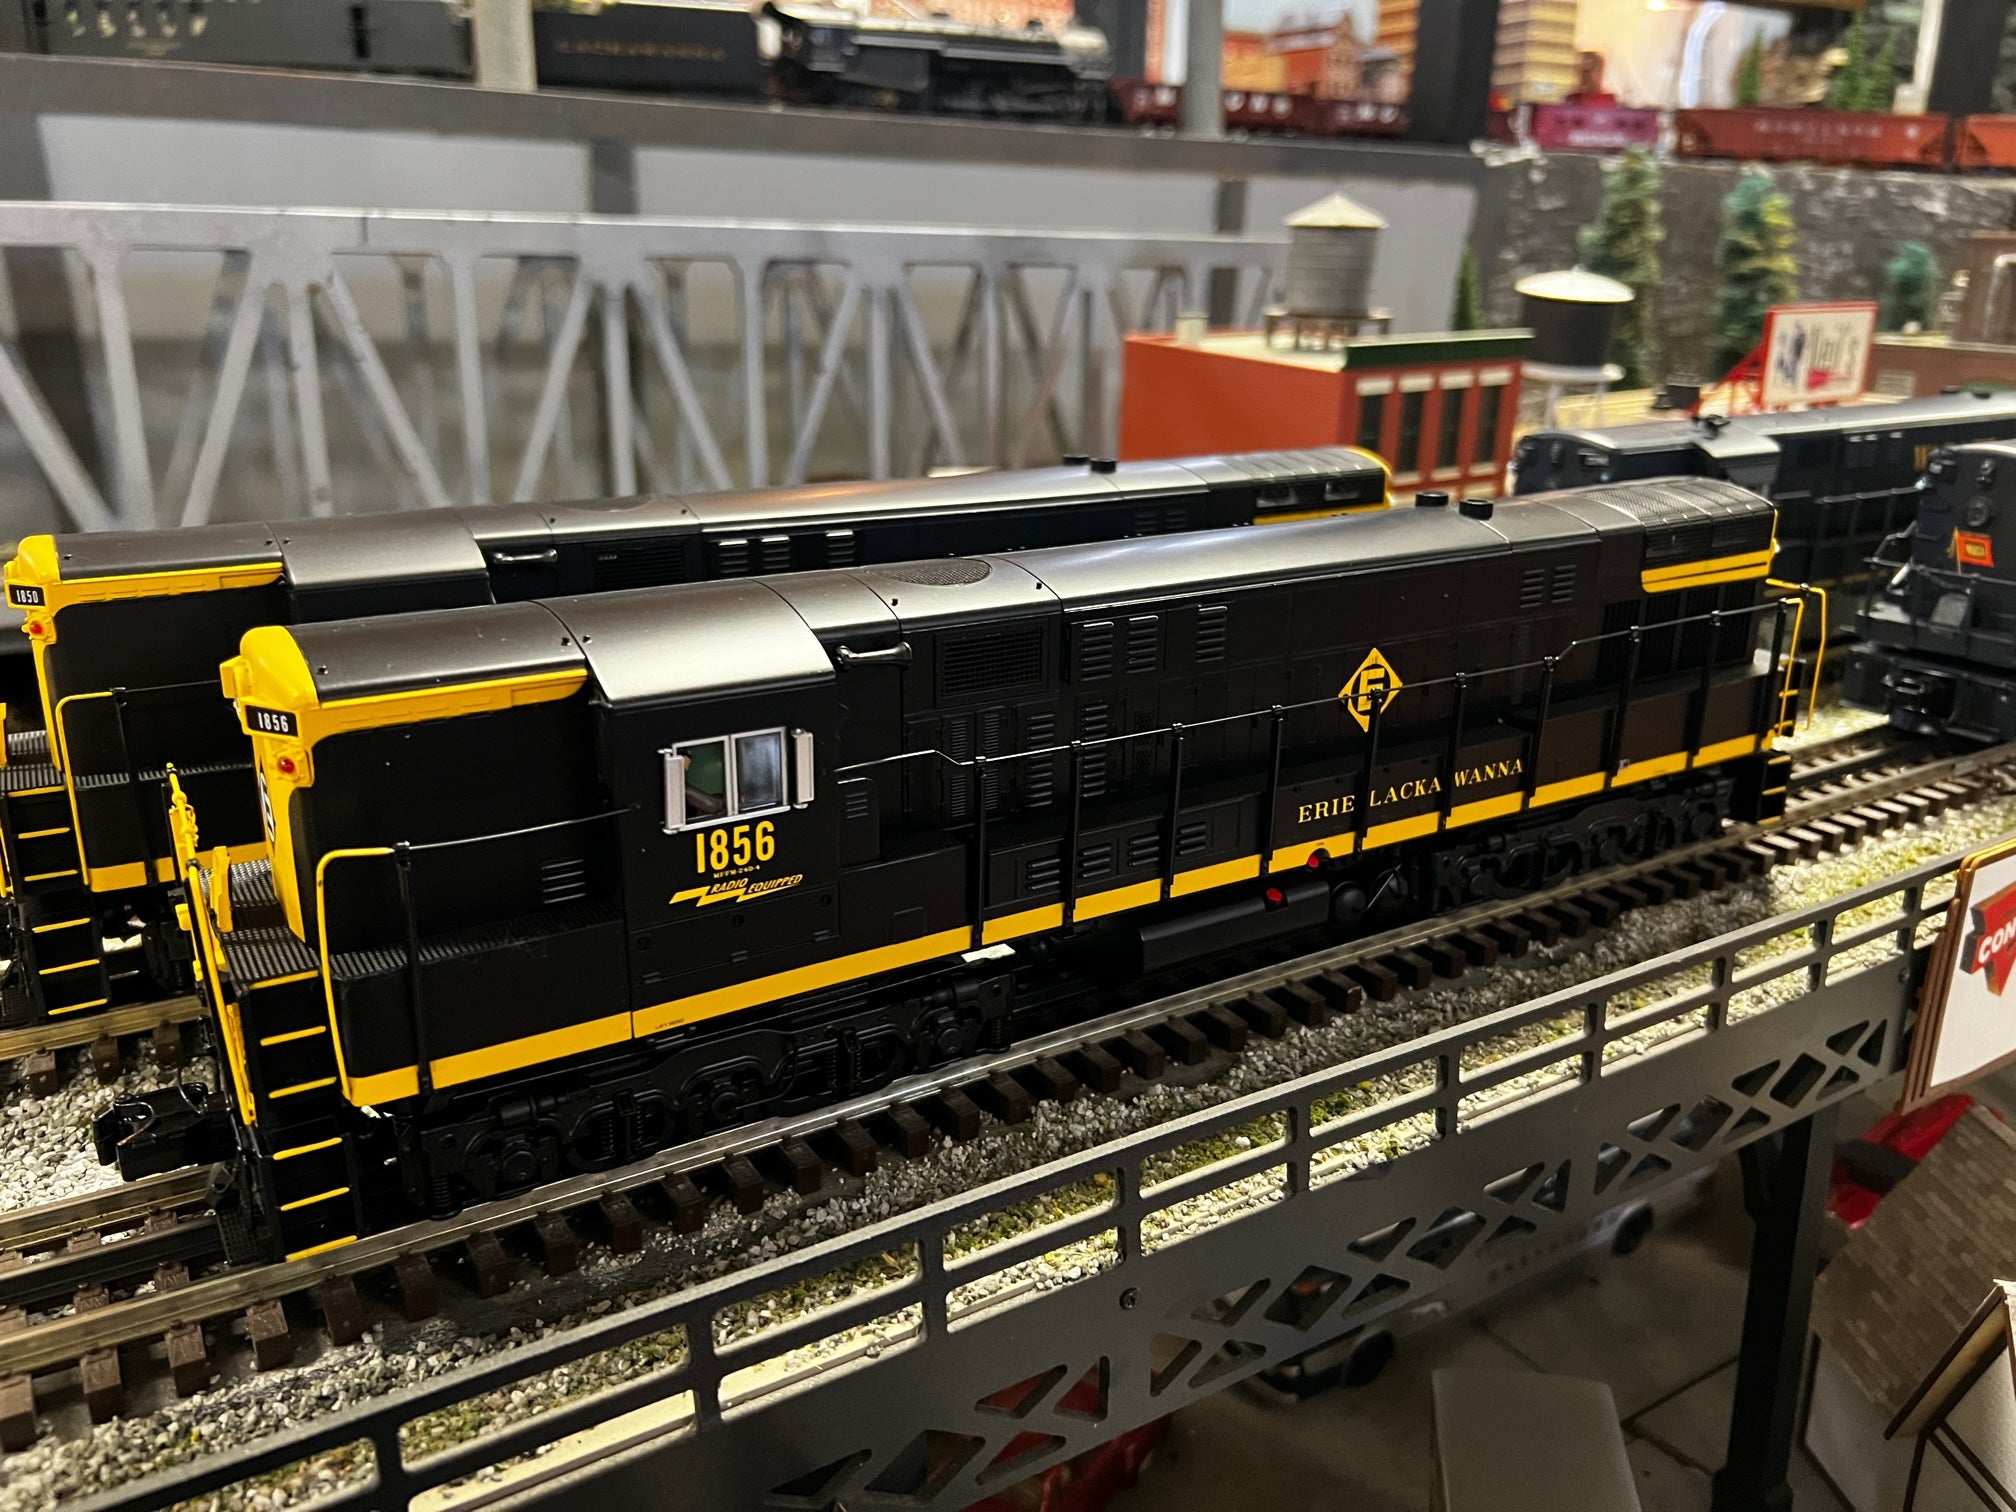 MTH 20-21683-1 - FM Train Master Diesel Engine "Erie Lackawanna" (Black) #1850 w/ PS3 (Hi-Rail Wheels) - Custom Run for MrMuffin'sTrains